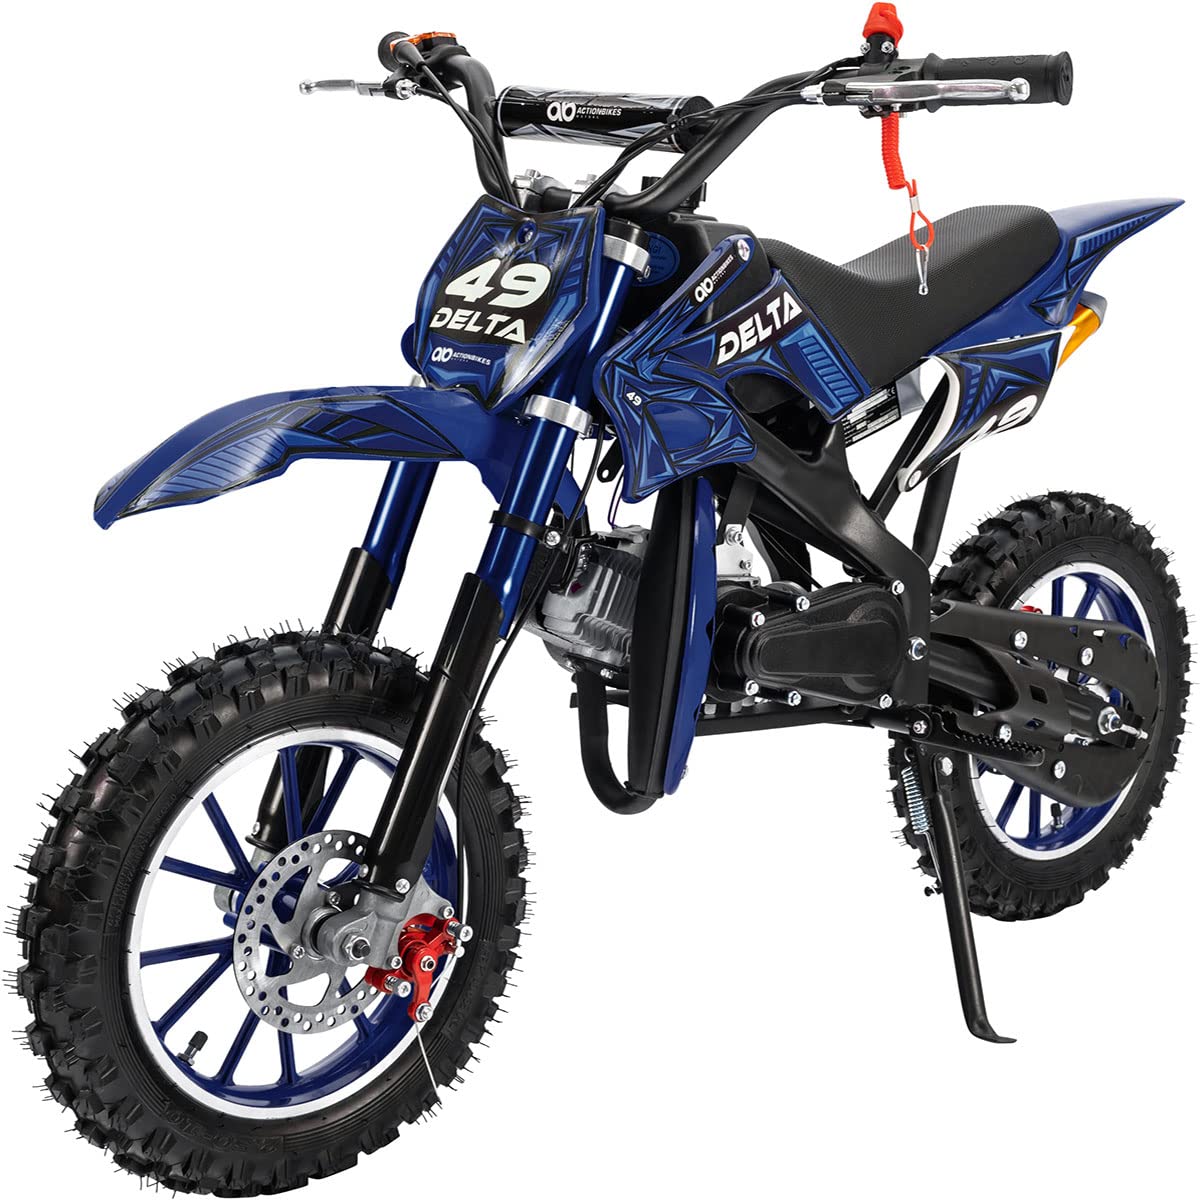 Actionbikes Motors Mini Kinder Crossbike Delta 49 cc - Scheibenbremsen - Sportluftfilter - Sportauspuff - Luftbereifung - Pocket Bike - Motorrad - Motocross - Dirt Bike - Enduro - Dirtbike (Blau) von Actionbikes Motors